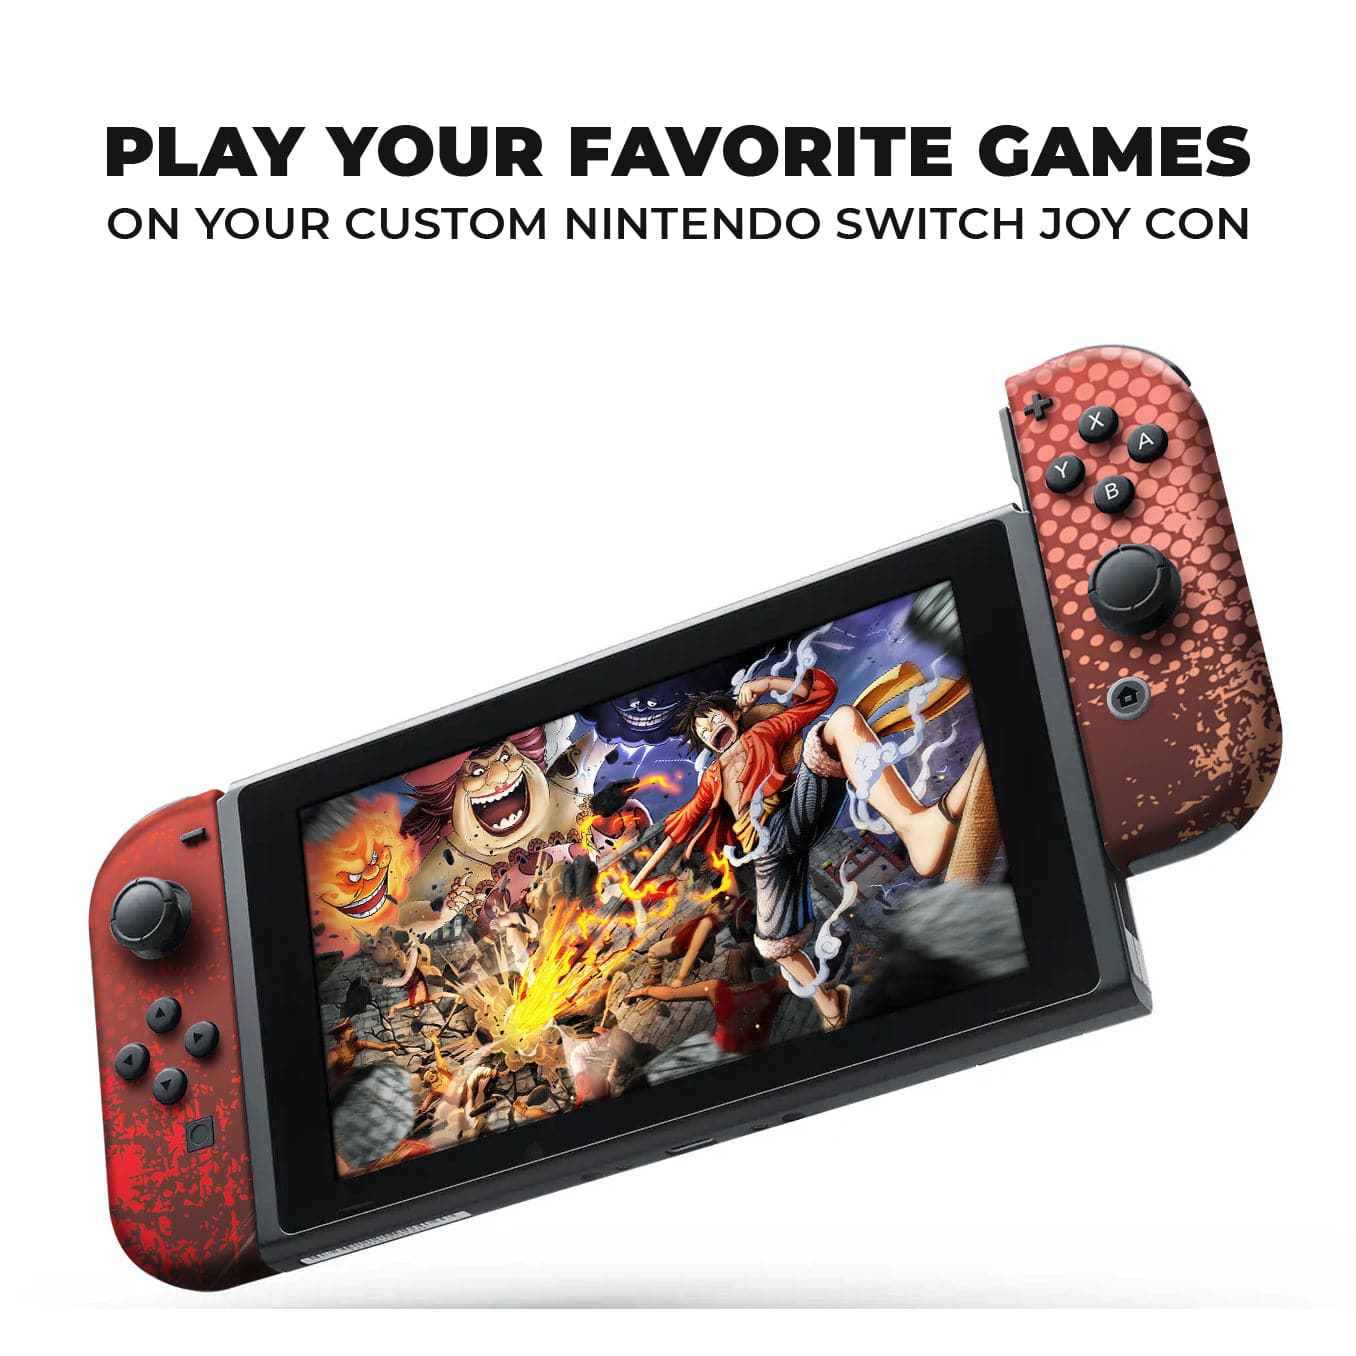 APEX Legends Inspired Nintendo Switch Full Set by Nintendo